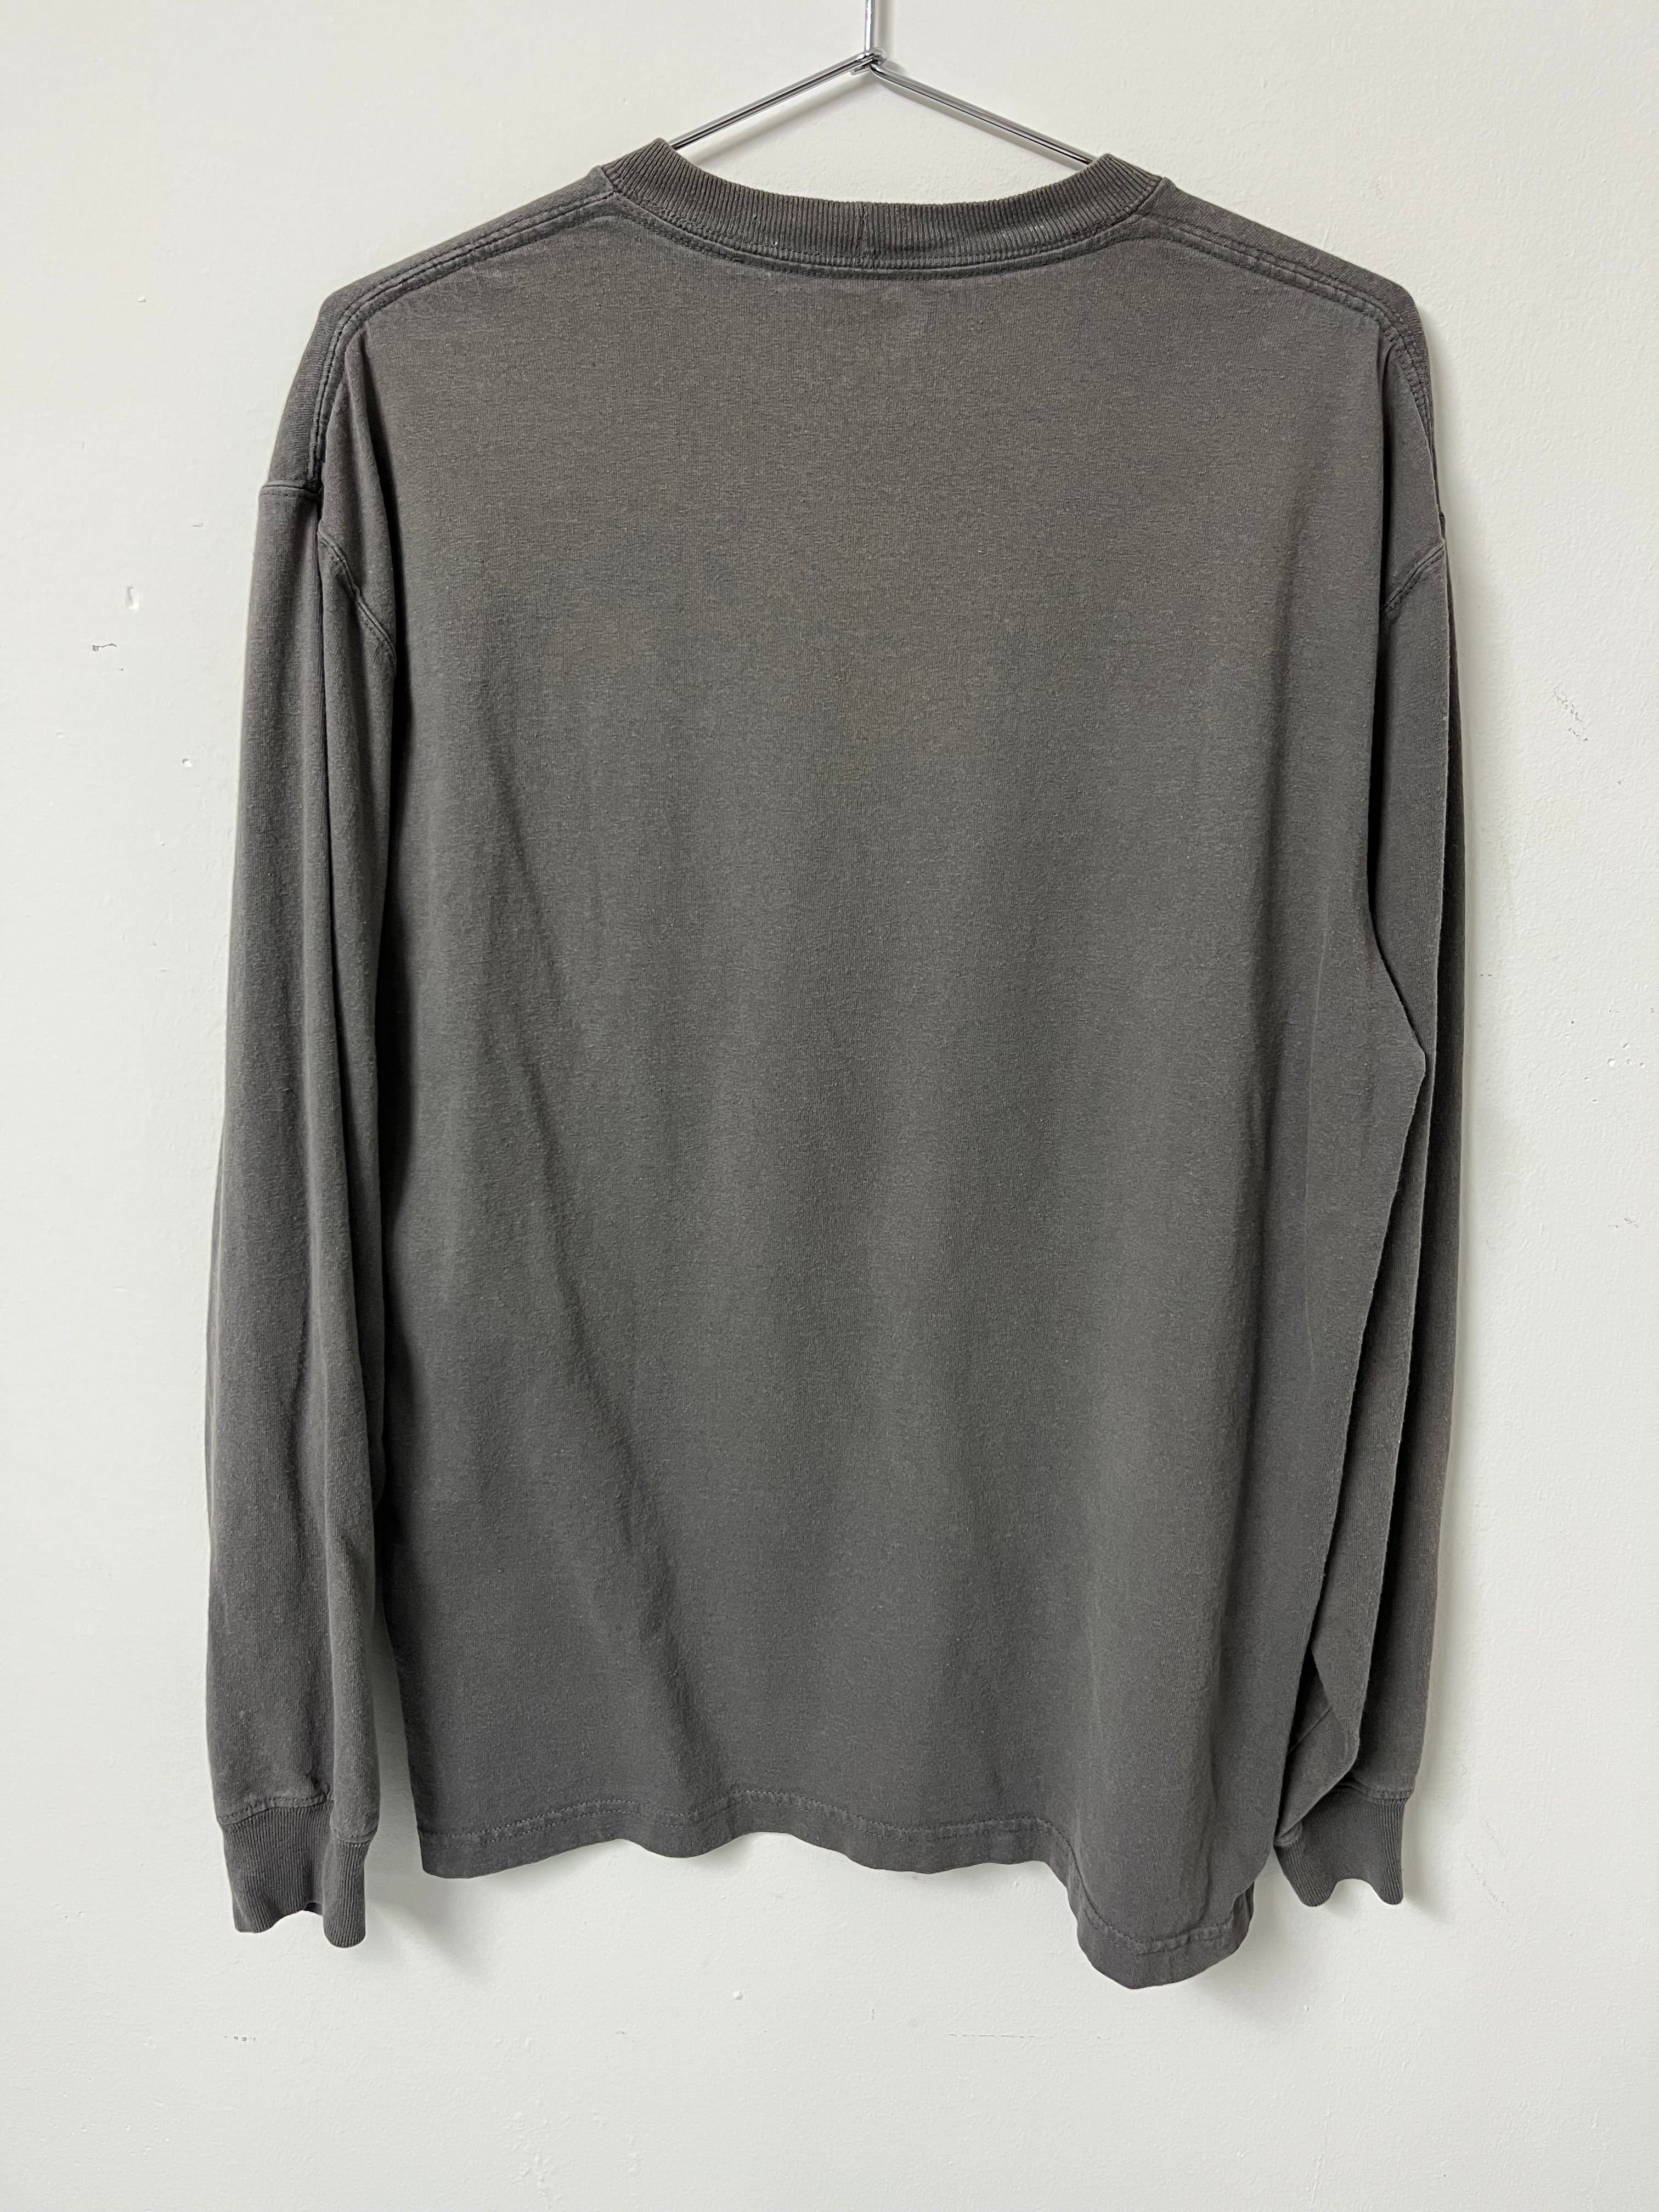 Vintage Carhartt Distressed Painter Longsleeve Pocket T-Shirt - Faded Black/Grey - S/M